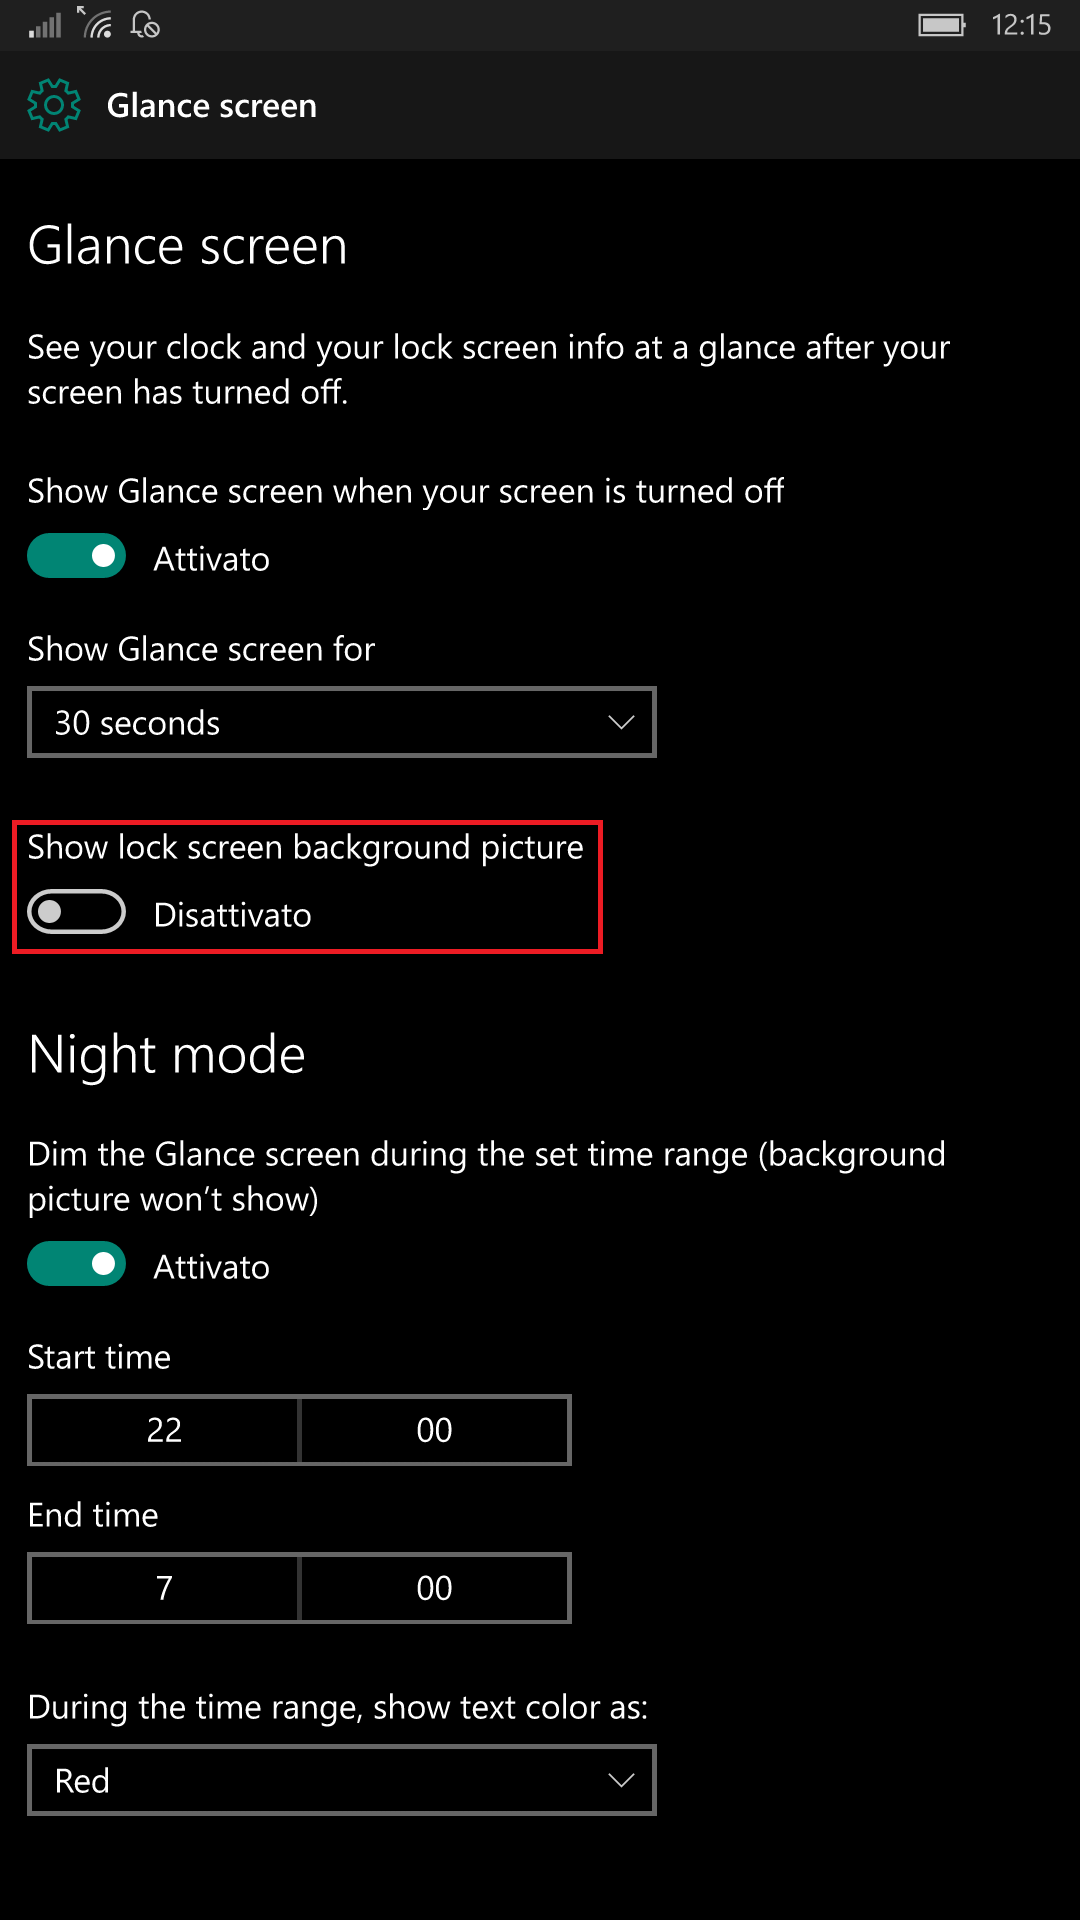 Glance screen - Windows 10 Mobile 14332.1001